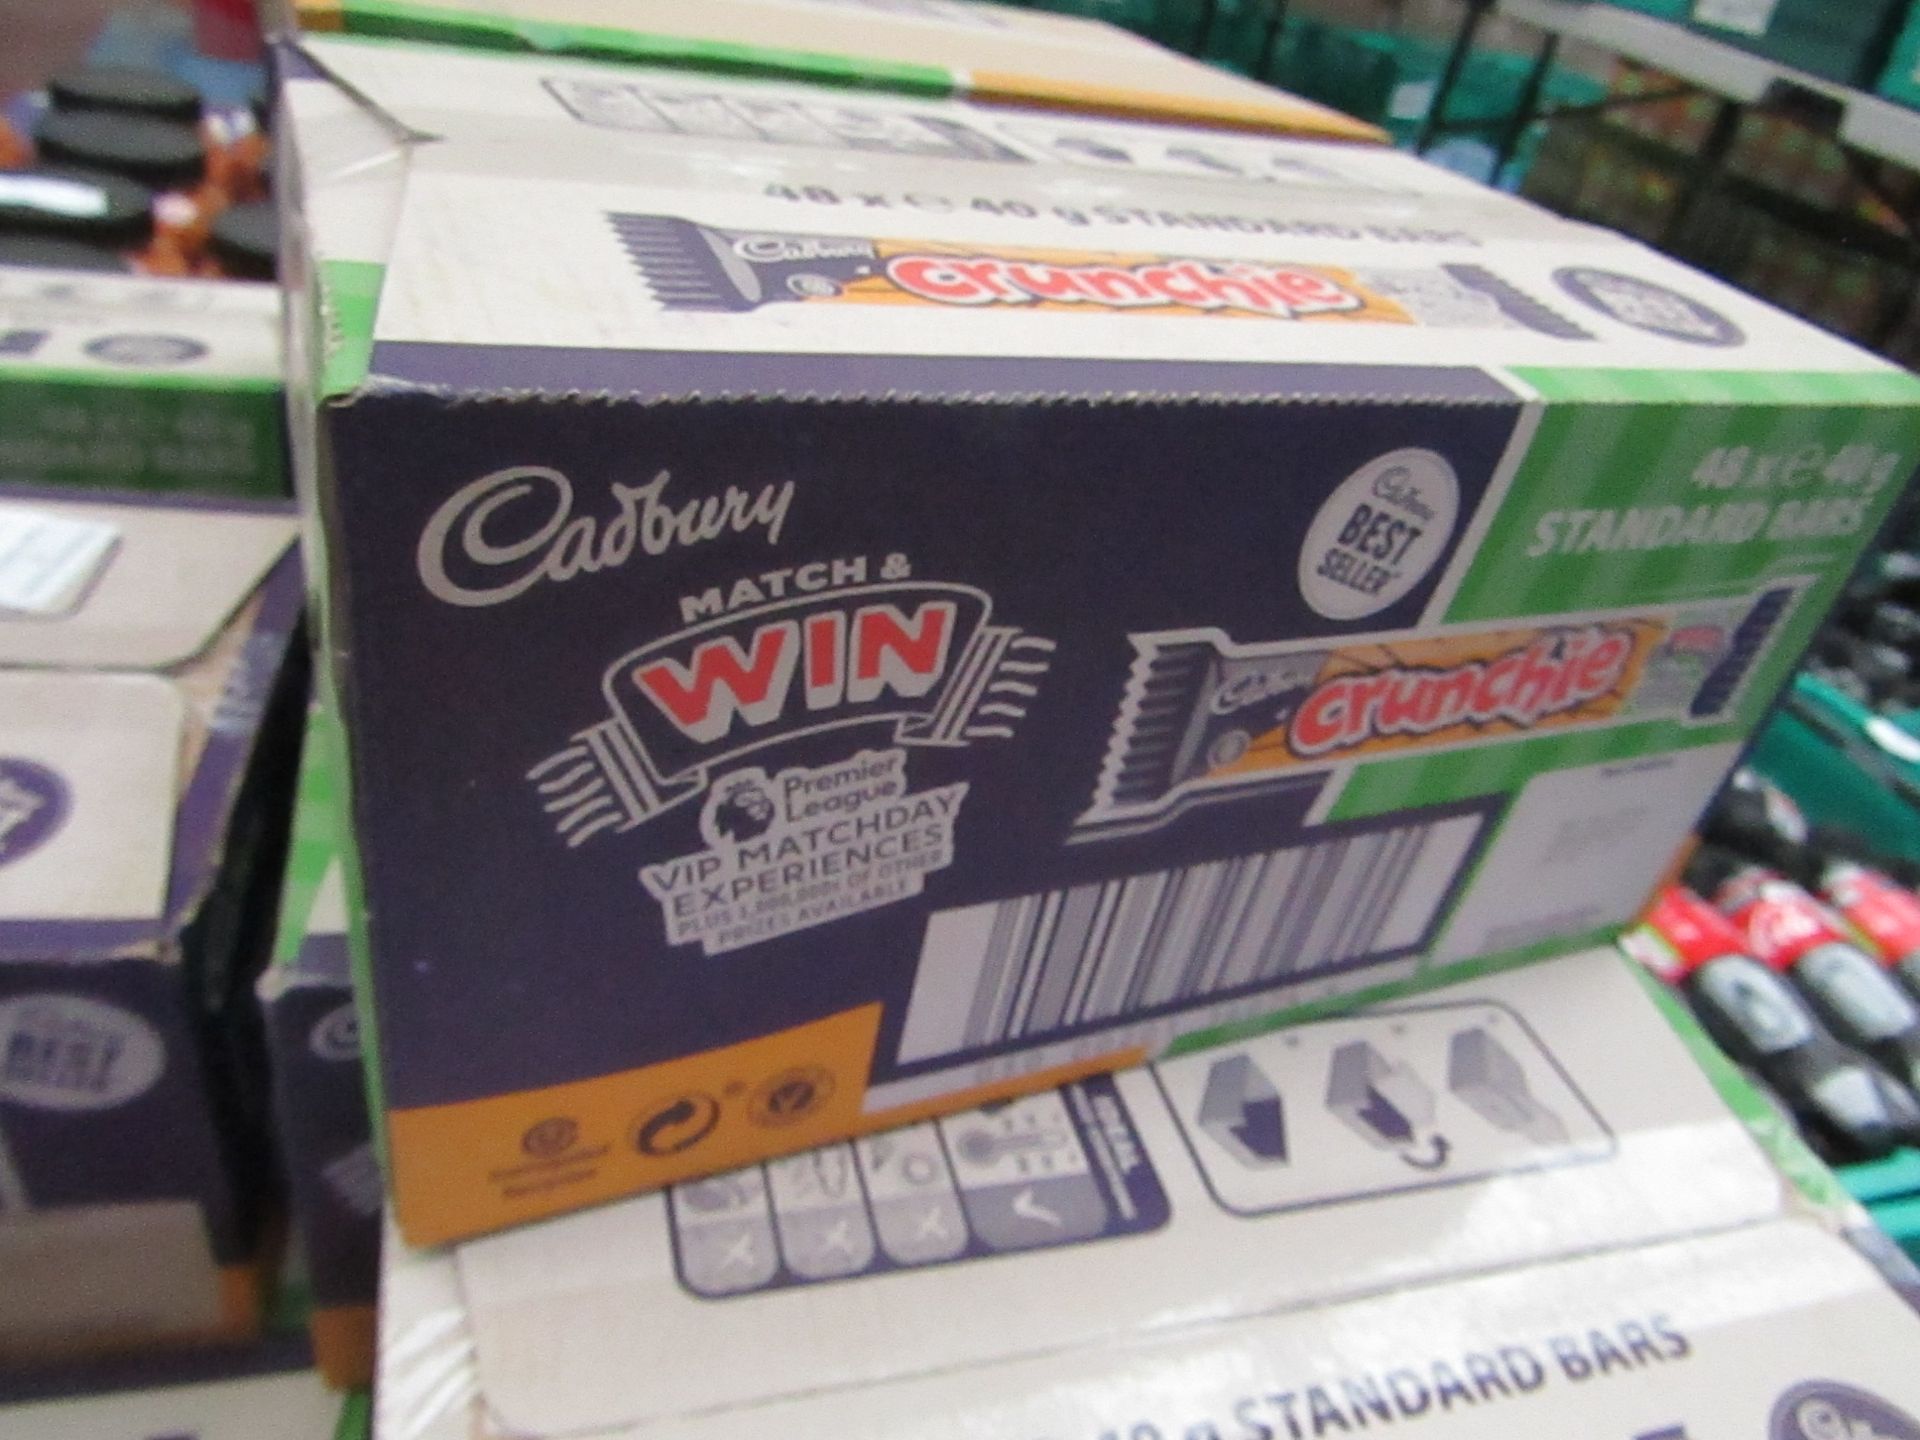 Box of 48 x 40g Cadbury Crunchies, BBE 03/04/2019